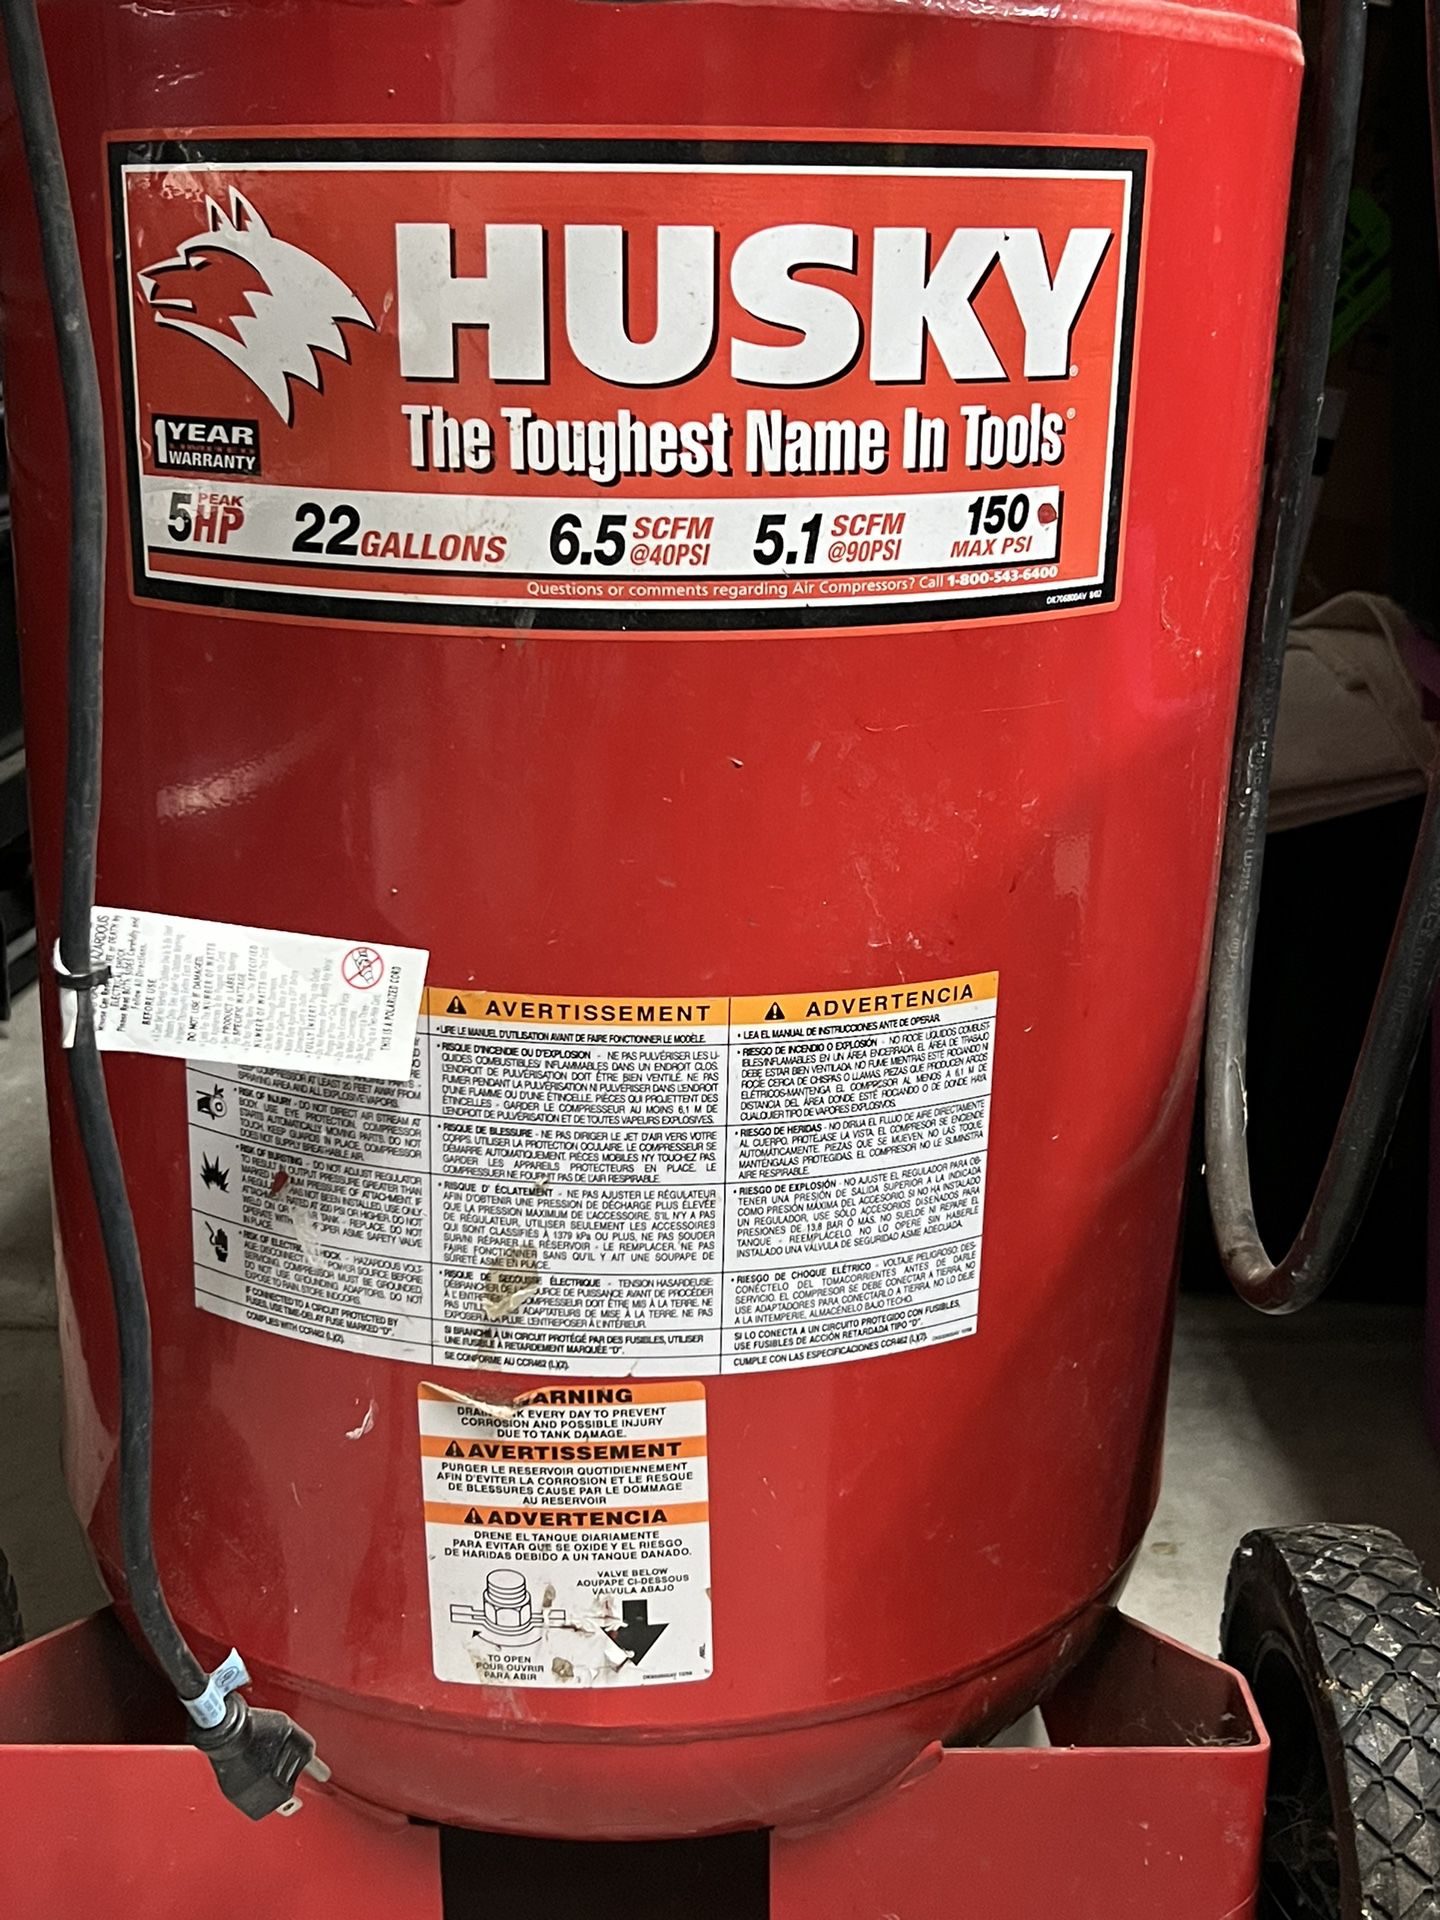 Husky 5hp 22 Gallon Air Compressor For Sale In Dixon Ca Offerup